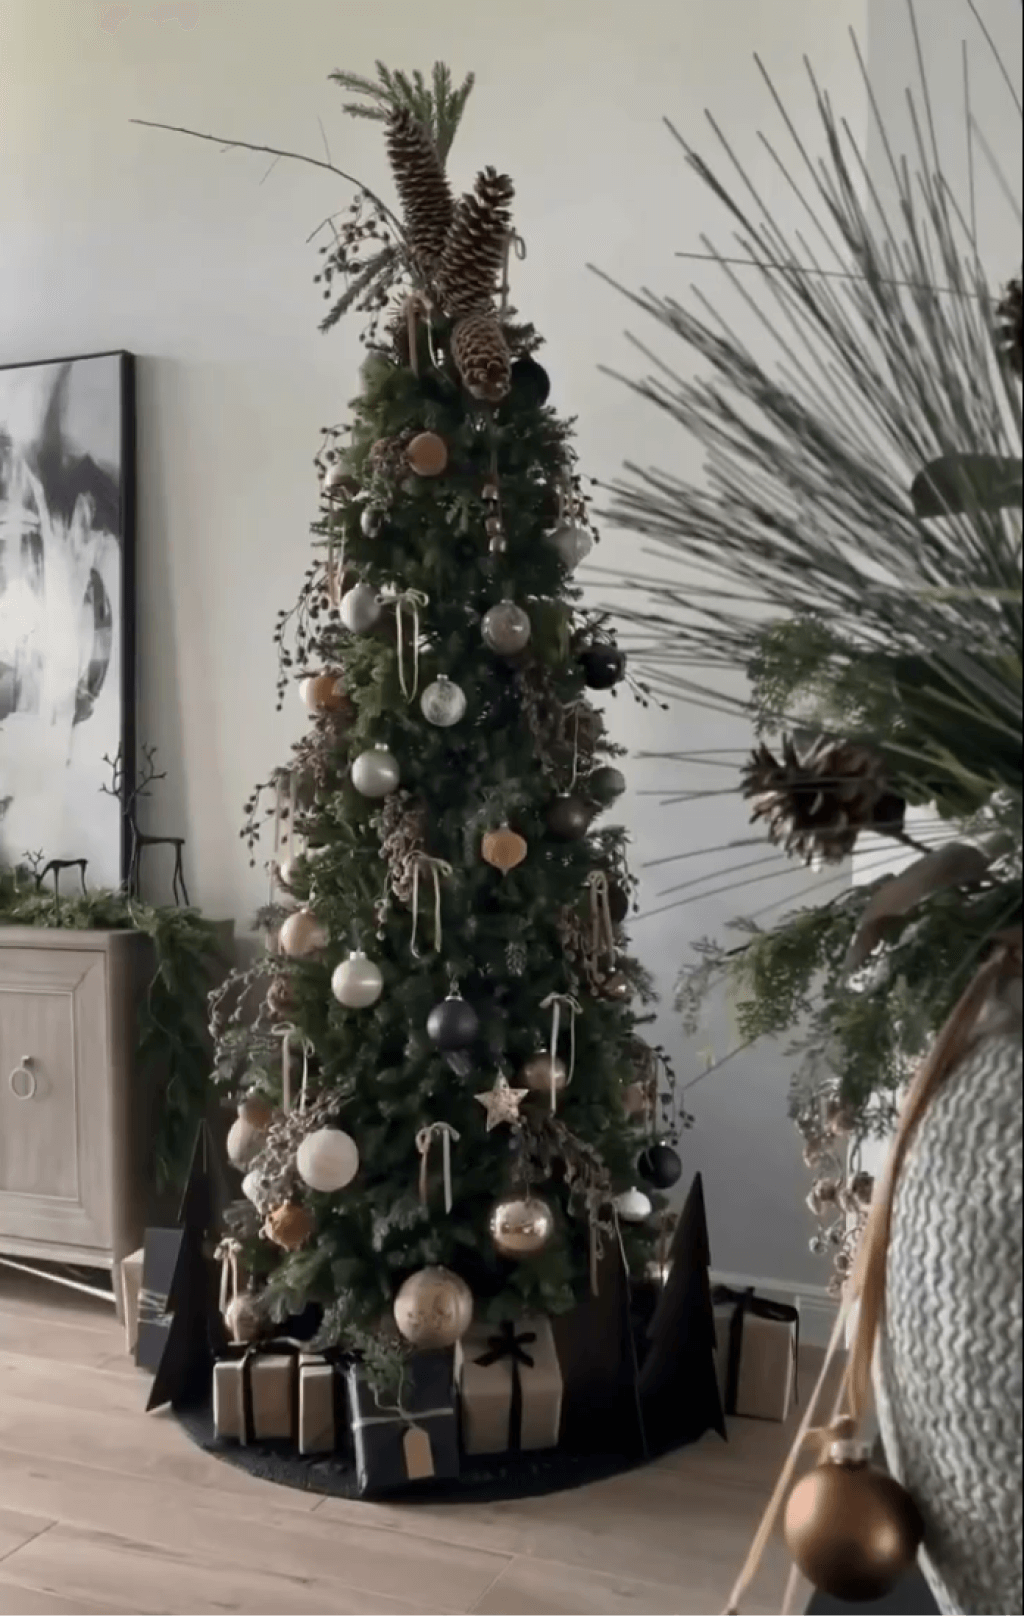 King of Christmas 9' Yorkshire Fir Slim Artificial Christmas Tree with 600 Warm White LED Lights